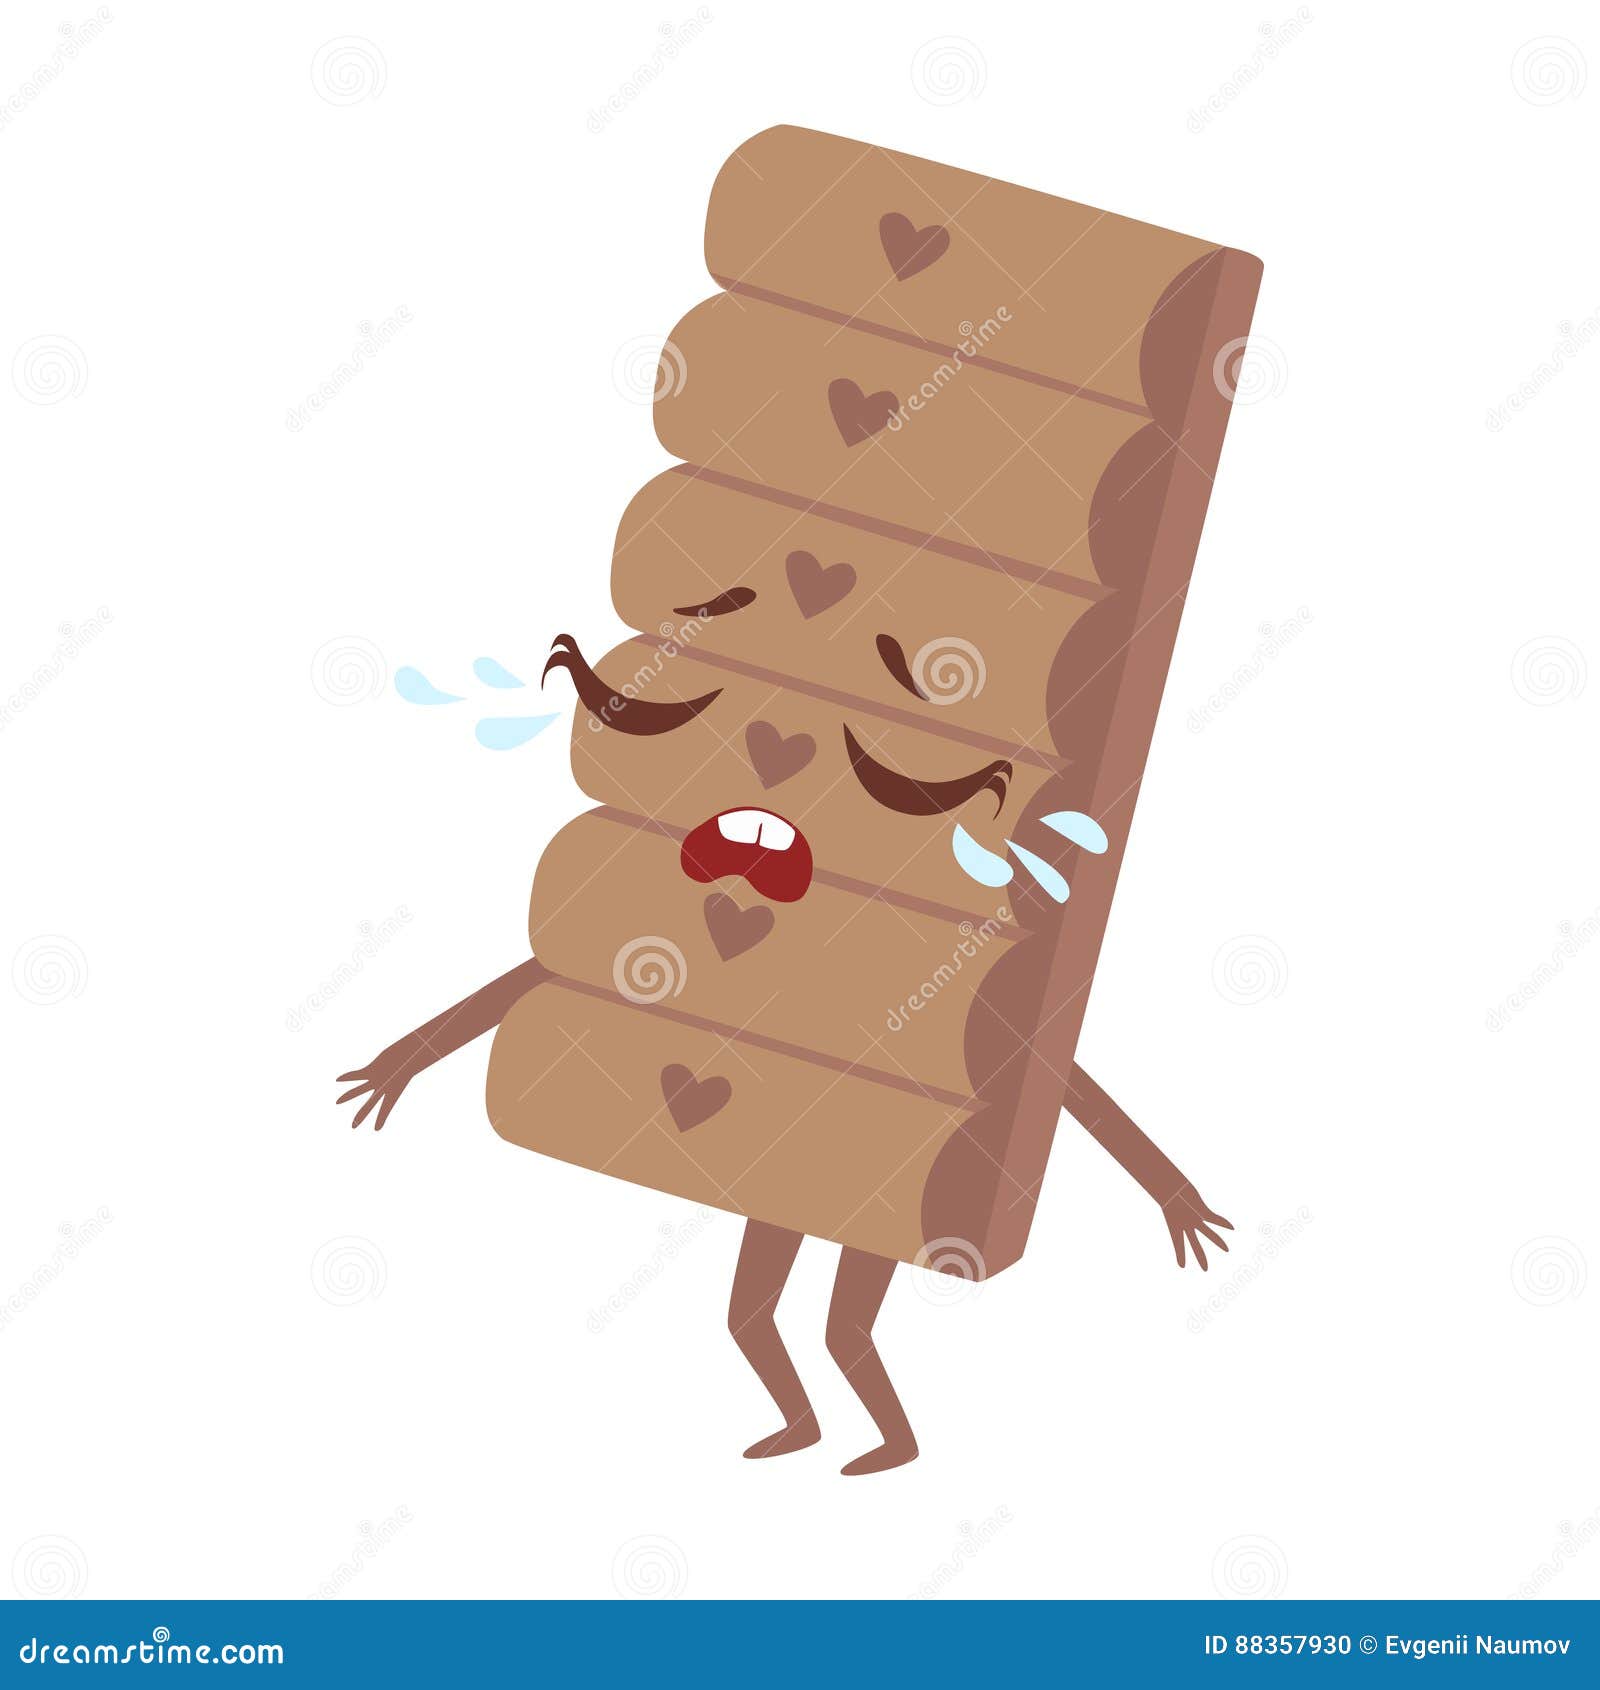 Crying Chocolate Bar Cute Anime Humanized Cartoon Food Character Emoji  Vector Illustration Stock Vector - Illustration of cartoon, emoticon:  88357930